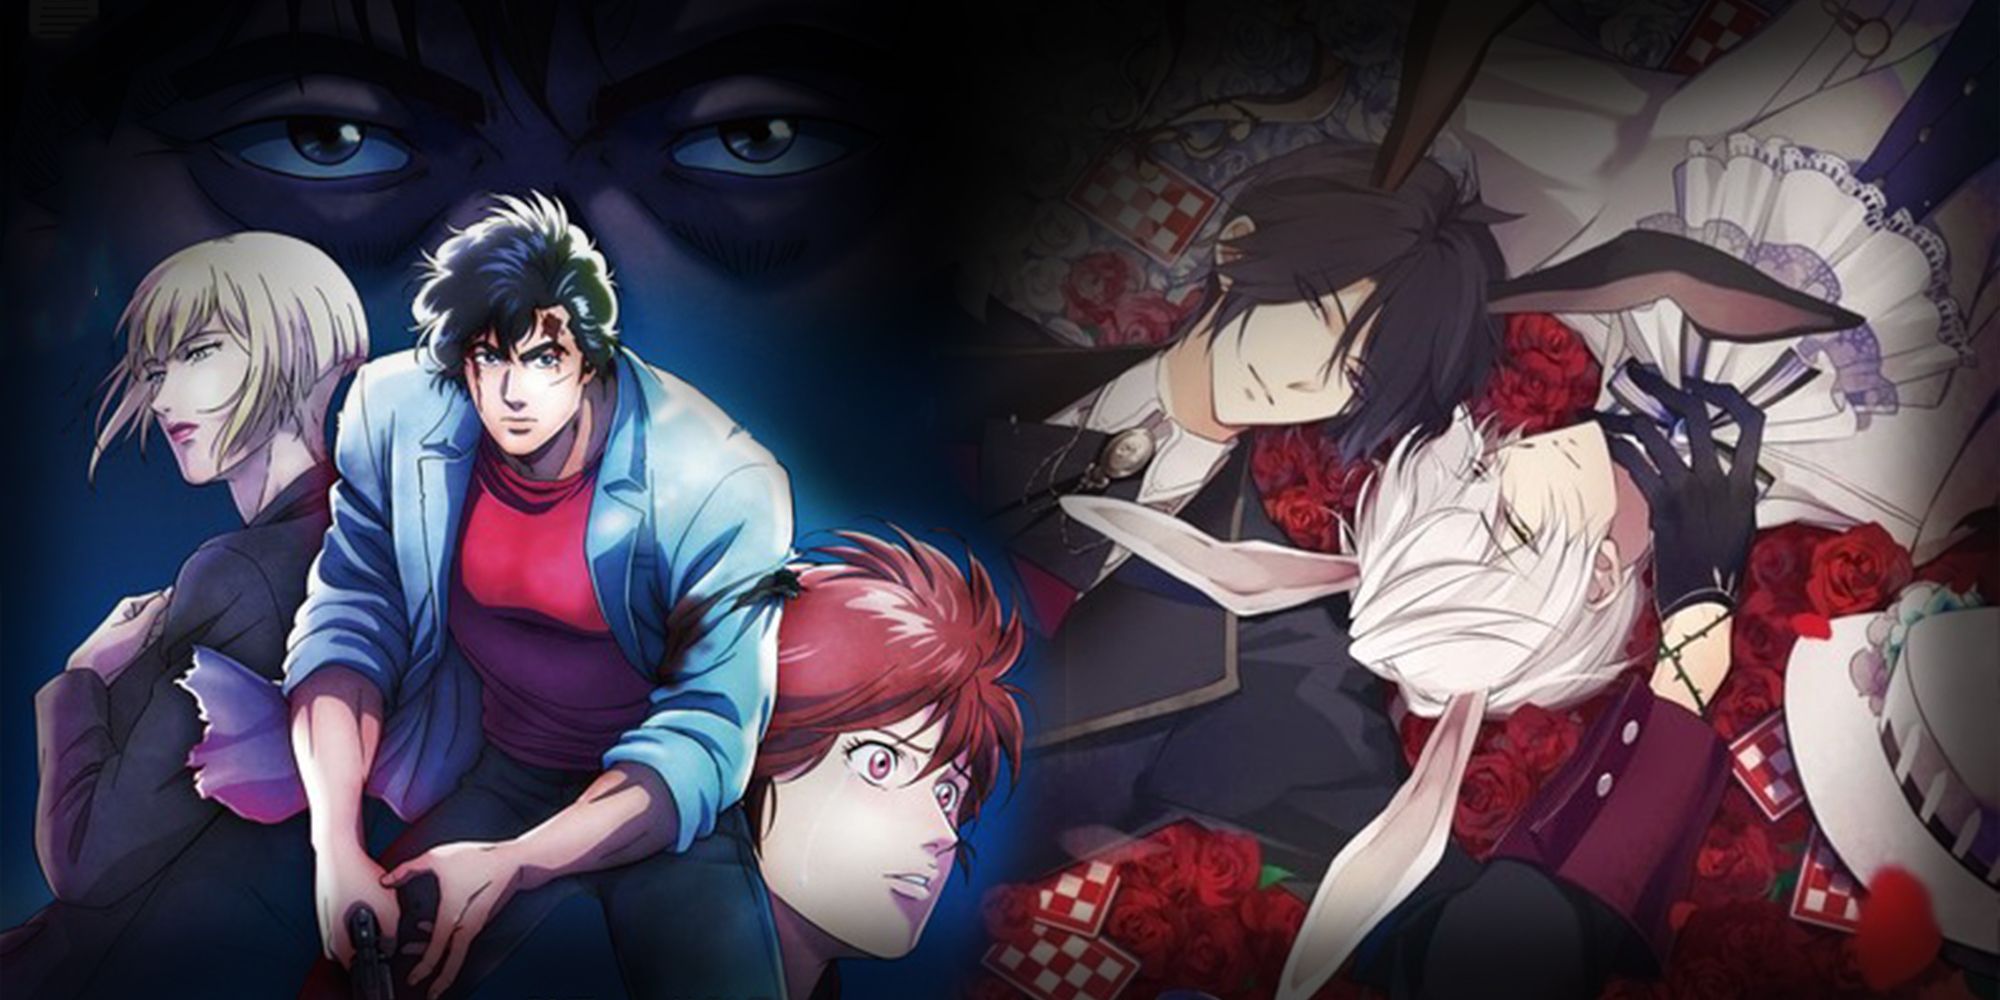 Reel Anime to bring four new anime films to NZ cinemas